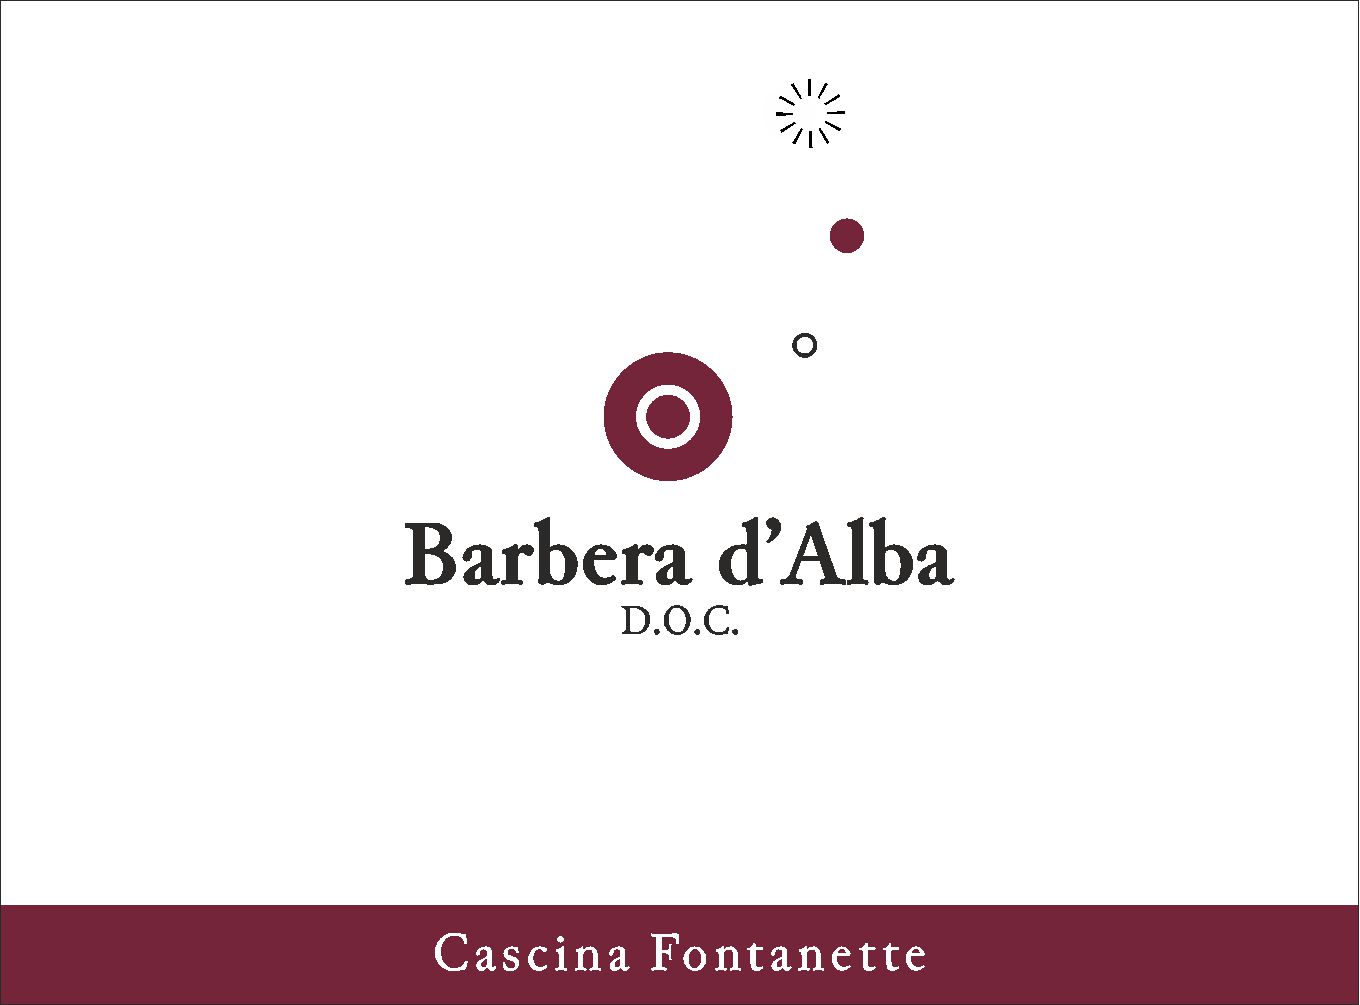 Barbera d’Alba DOCG - Cascina Fontanette (label)